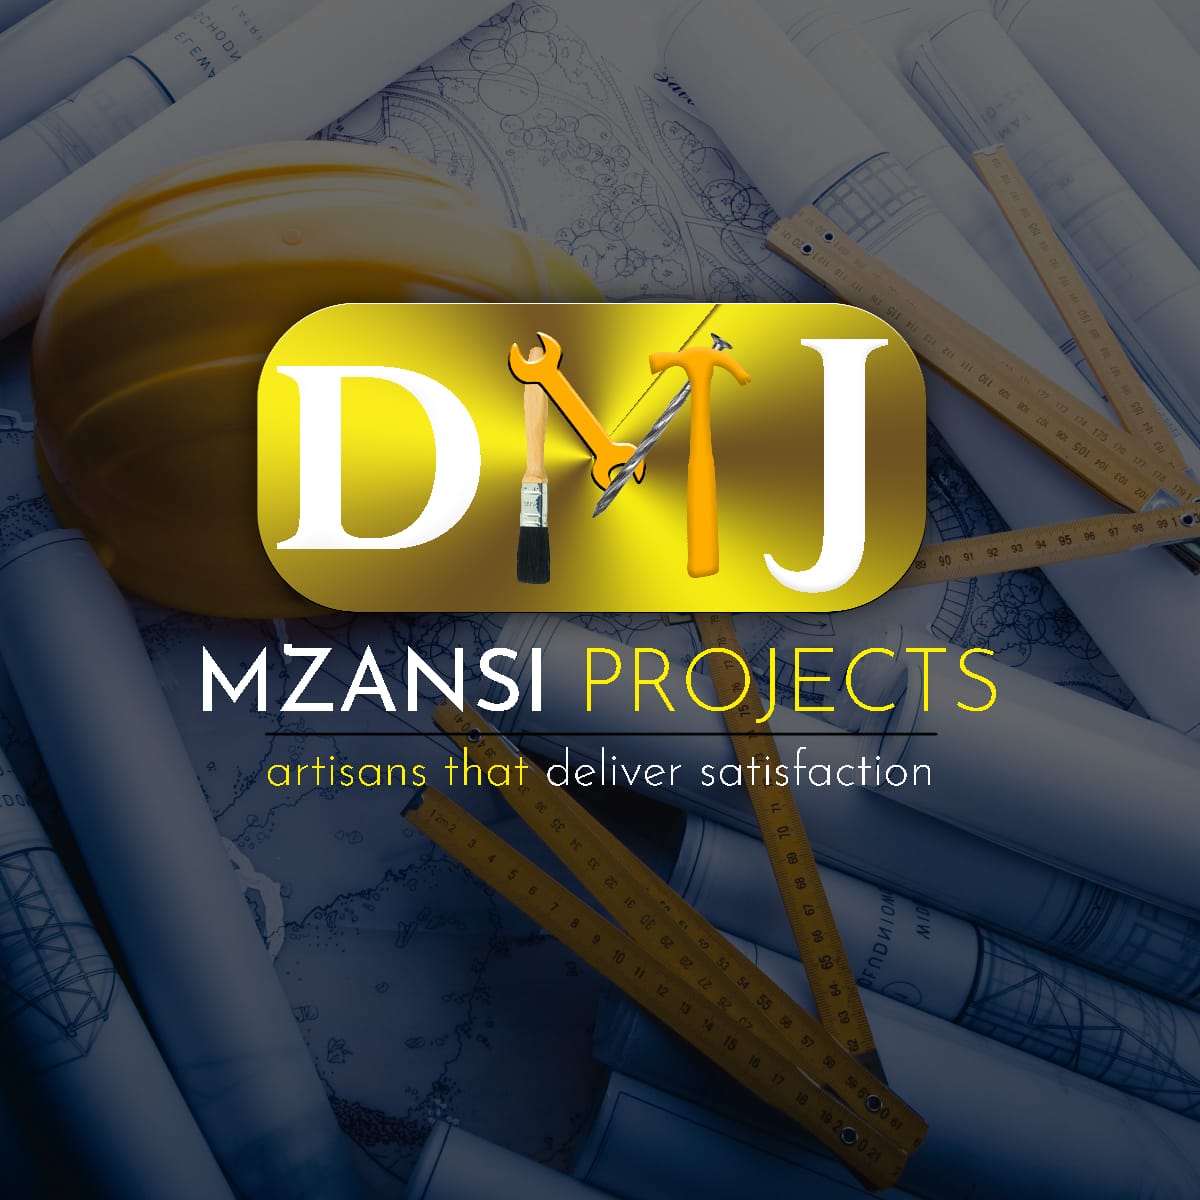 DMJ Mzansi Projects logo